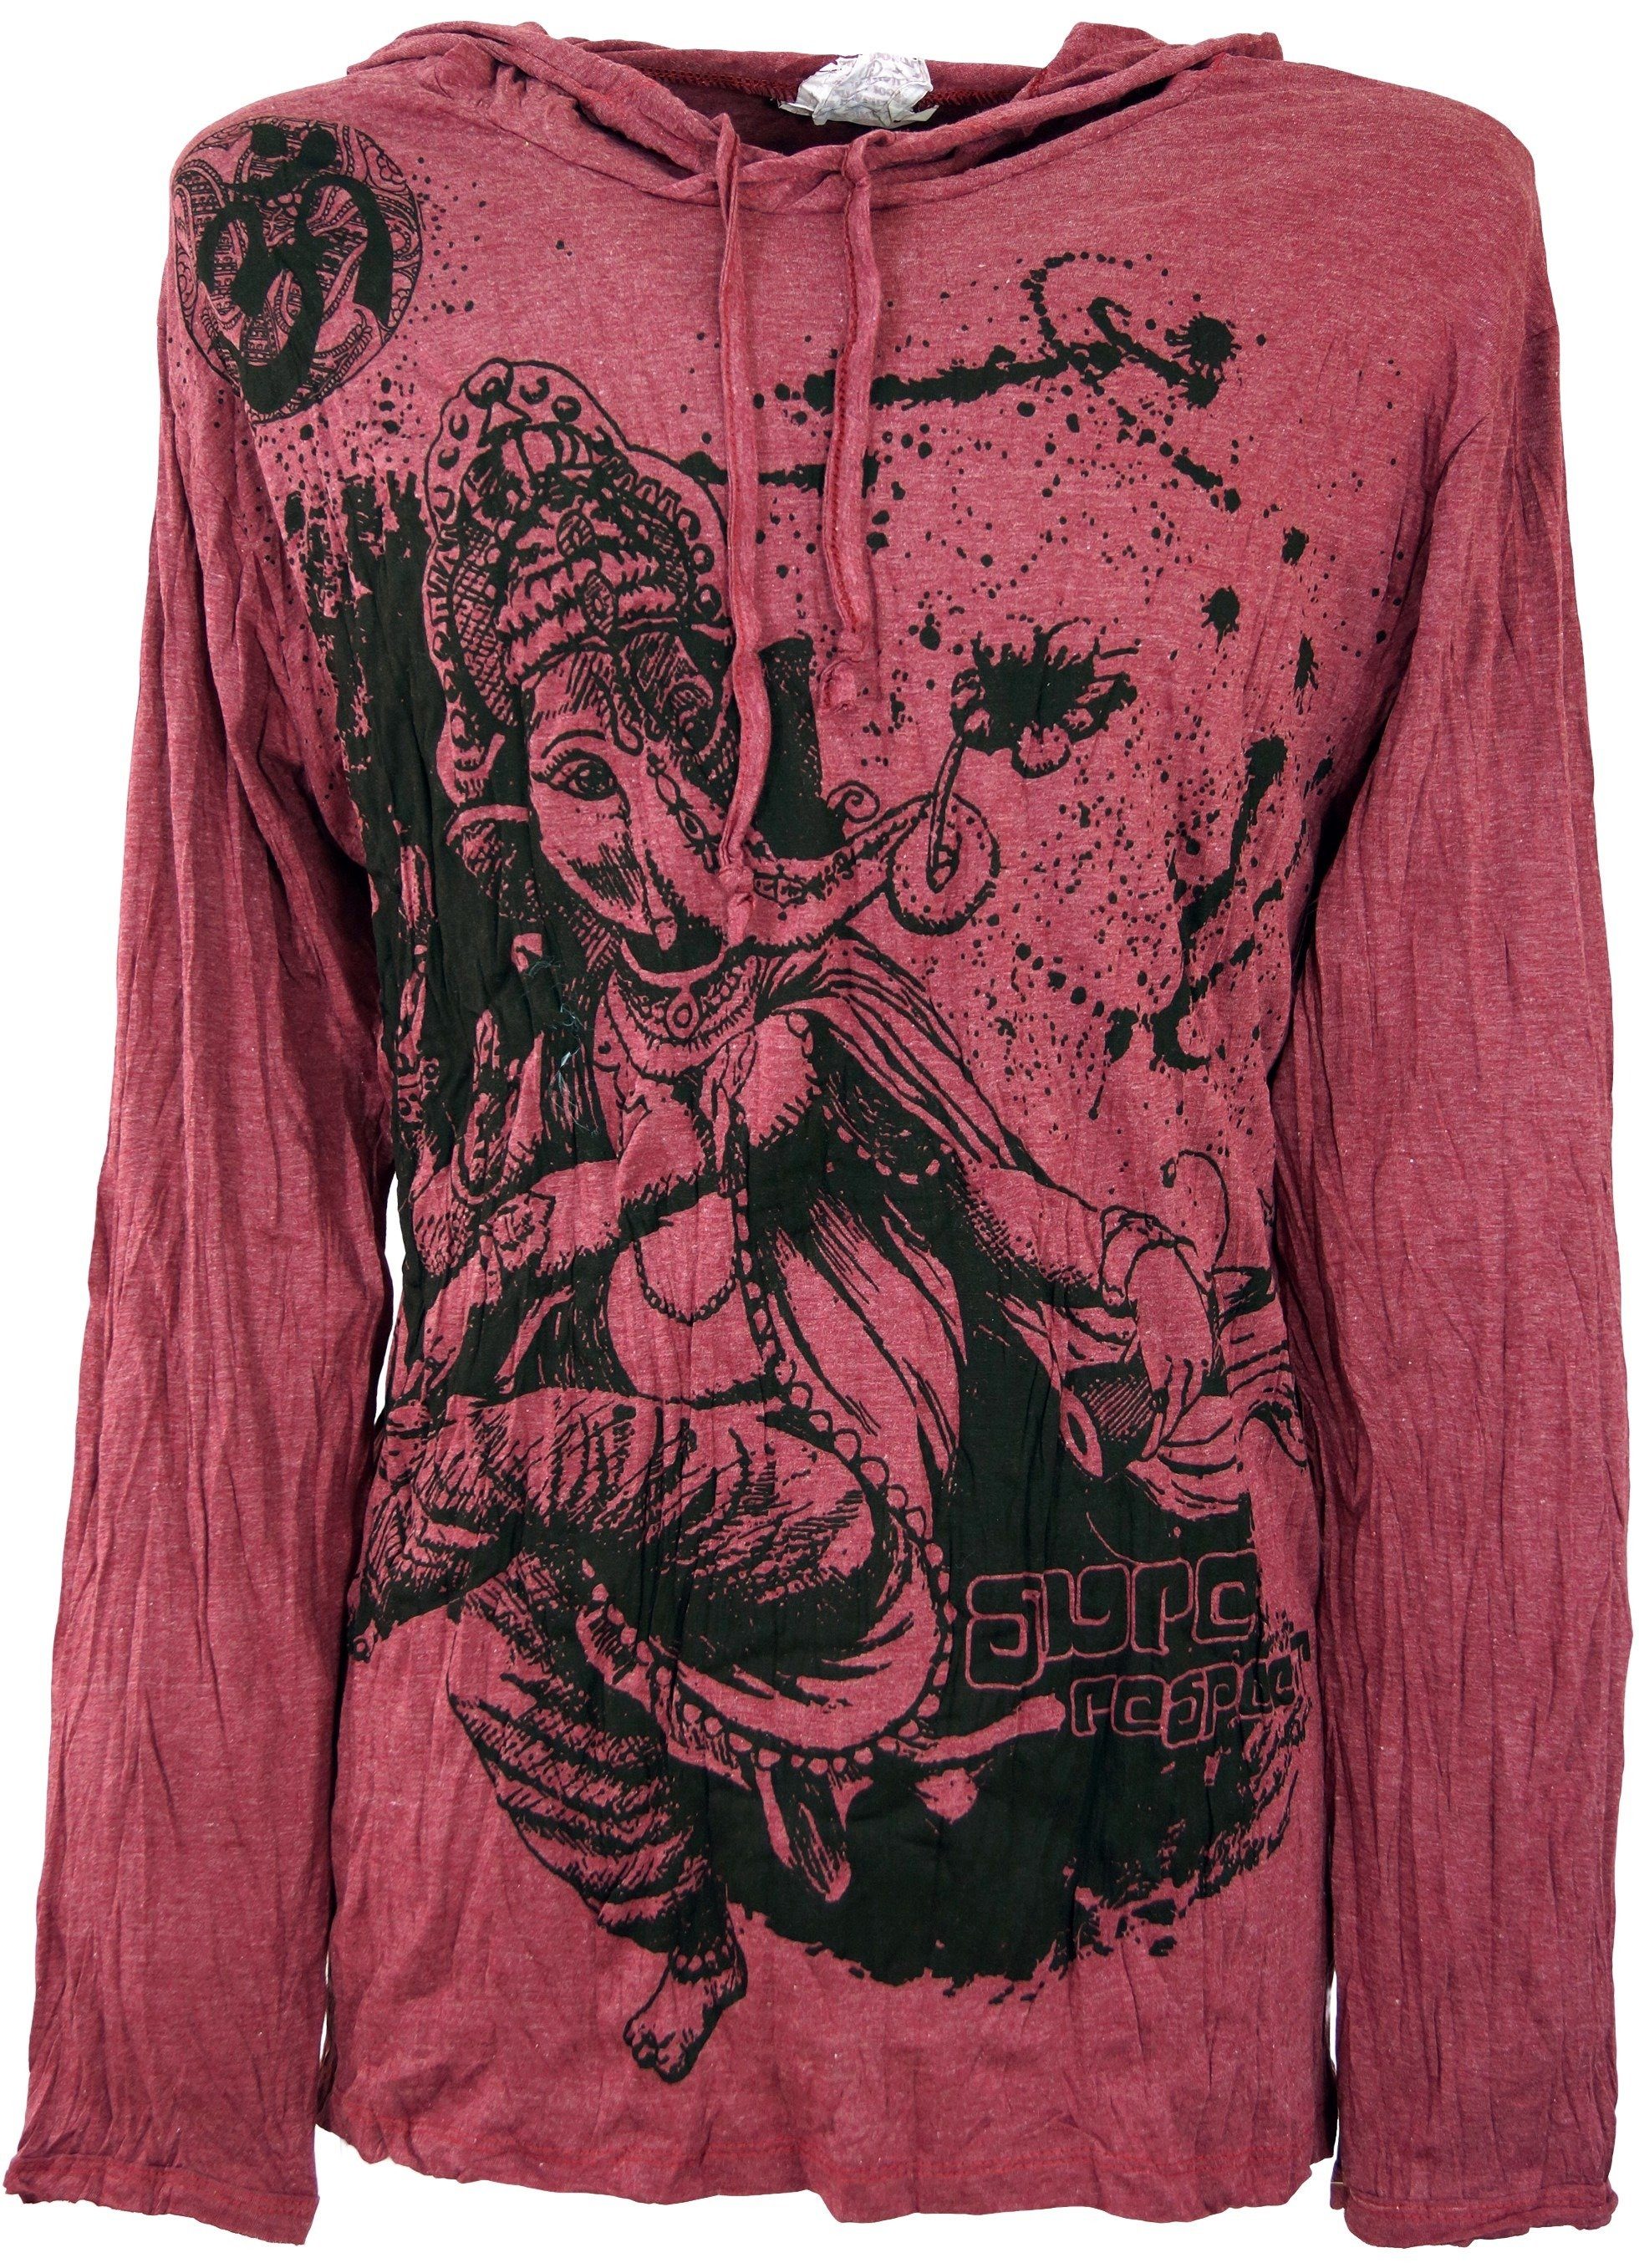 bordeaux Guru-Shop Sure Kapuzenshirt Bekleidung alternative Goa Style, Langarmshirt, T-Shirt Ganesh.. Festival, Dancing